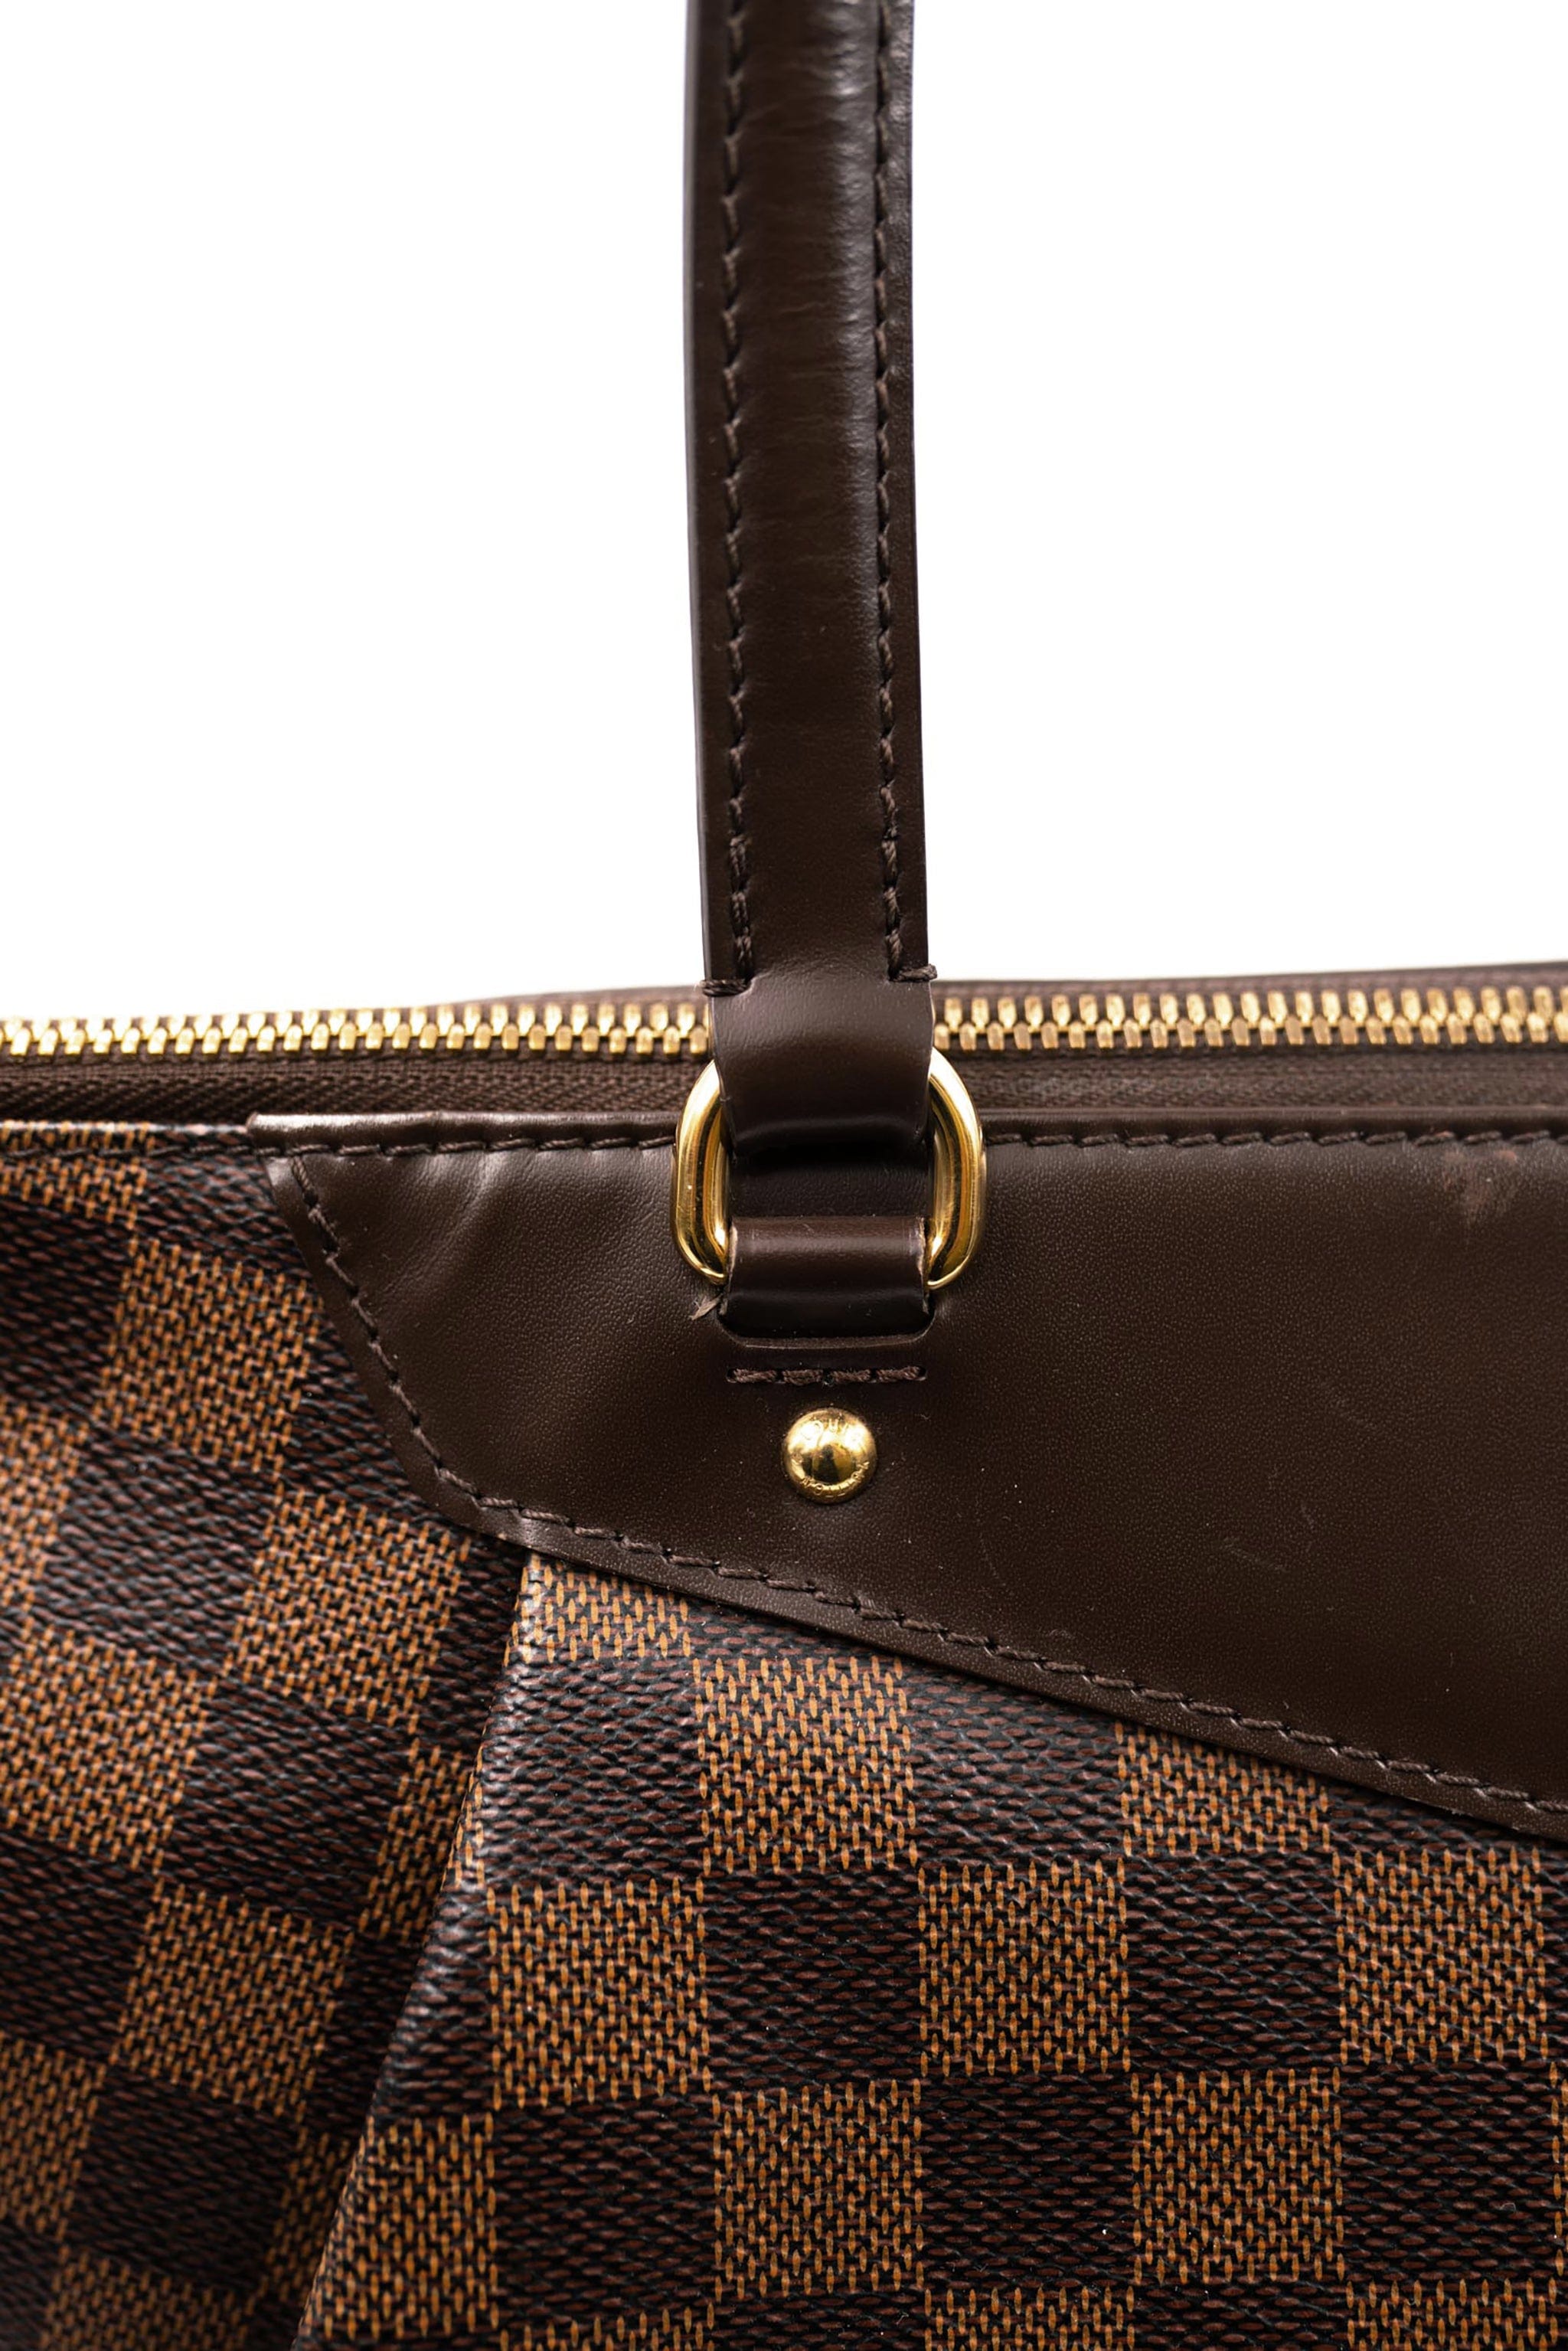 Louis Vuitton Louis Vuitton damier bag - AGC1387